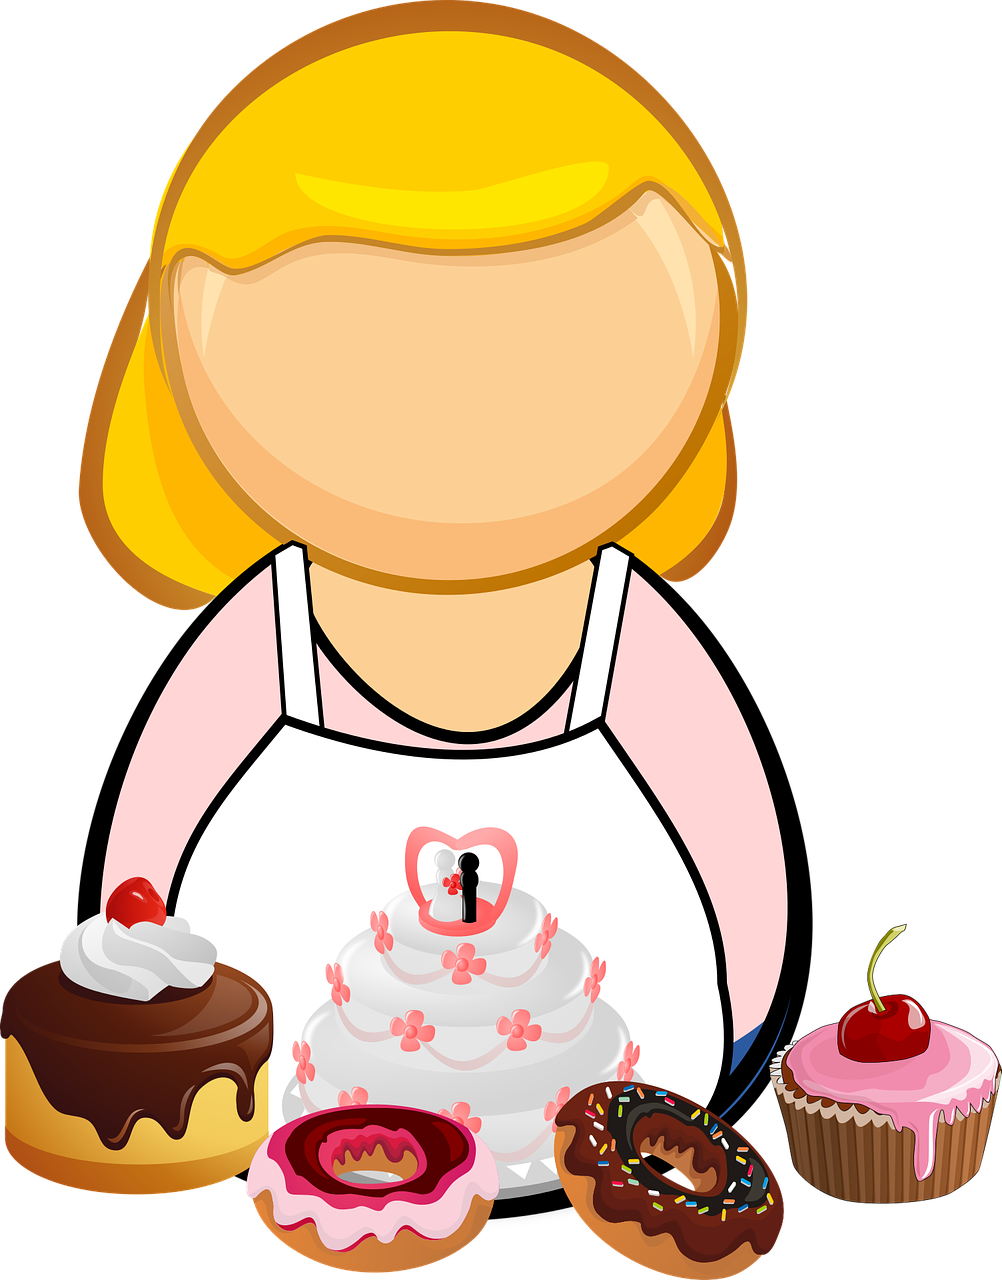 bake cake comic characters free photo